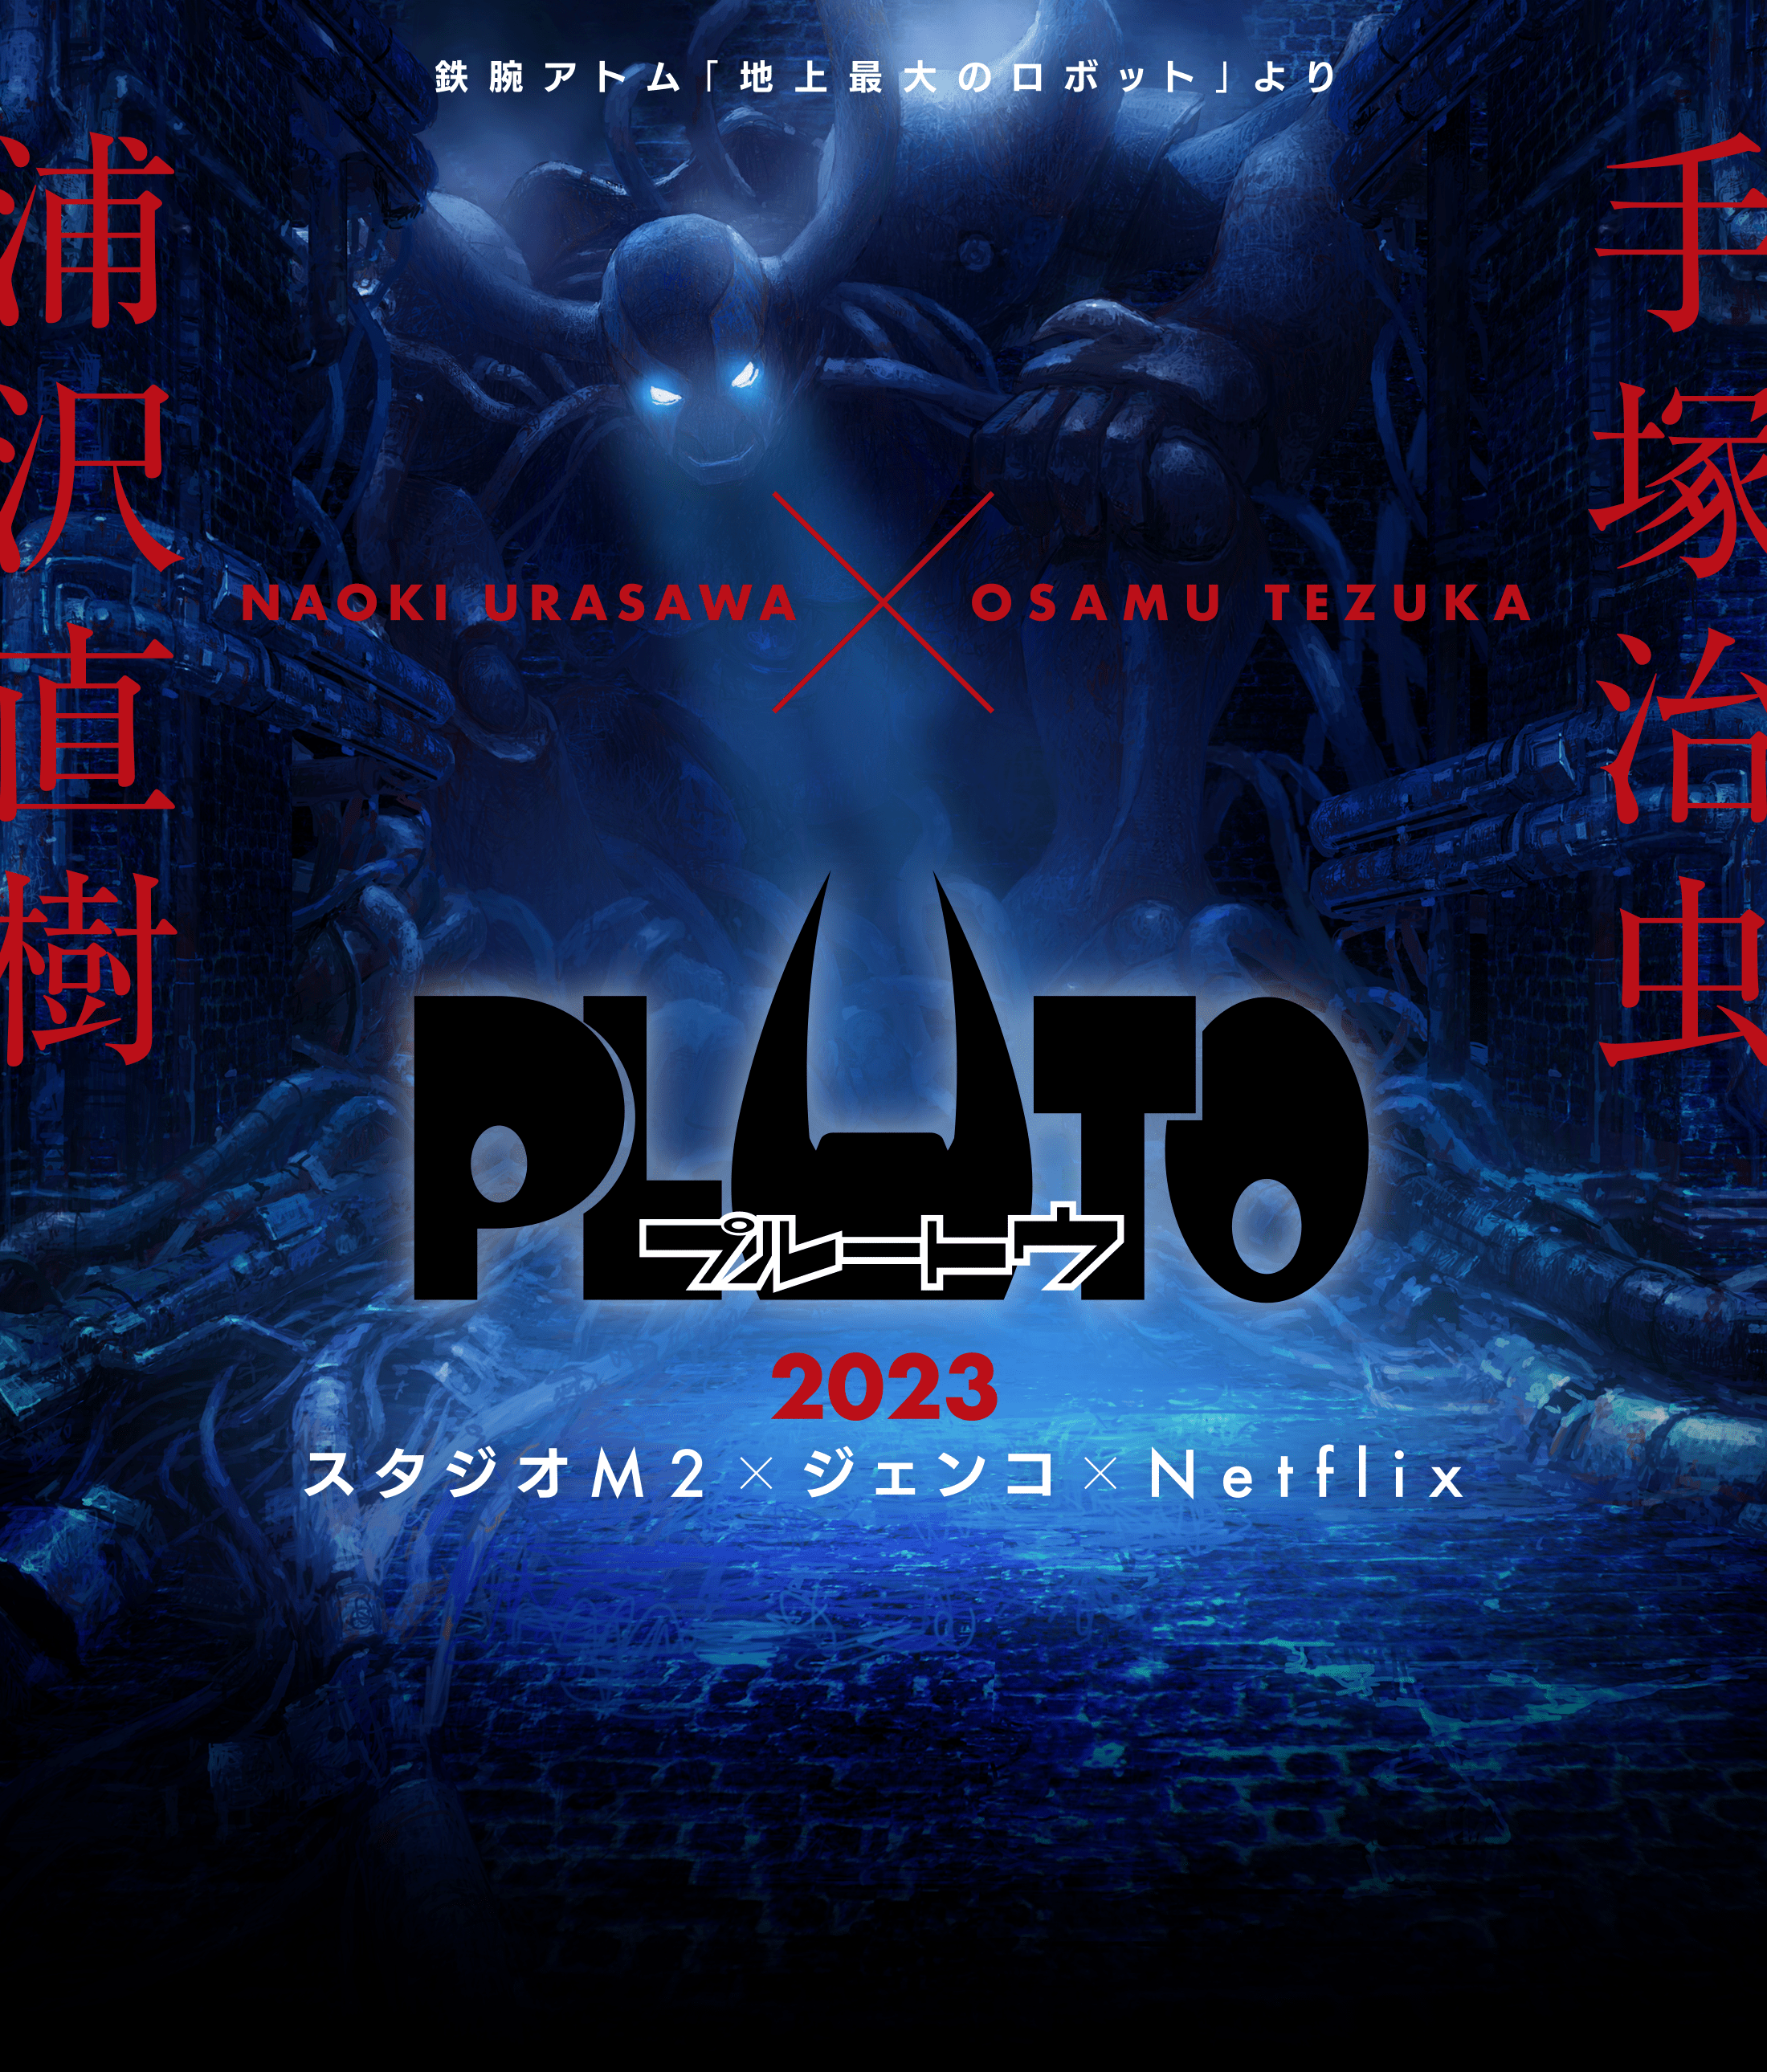 Pluto Anime Reveals Main Trailer and Visual